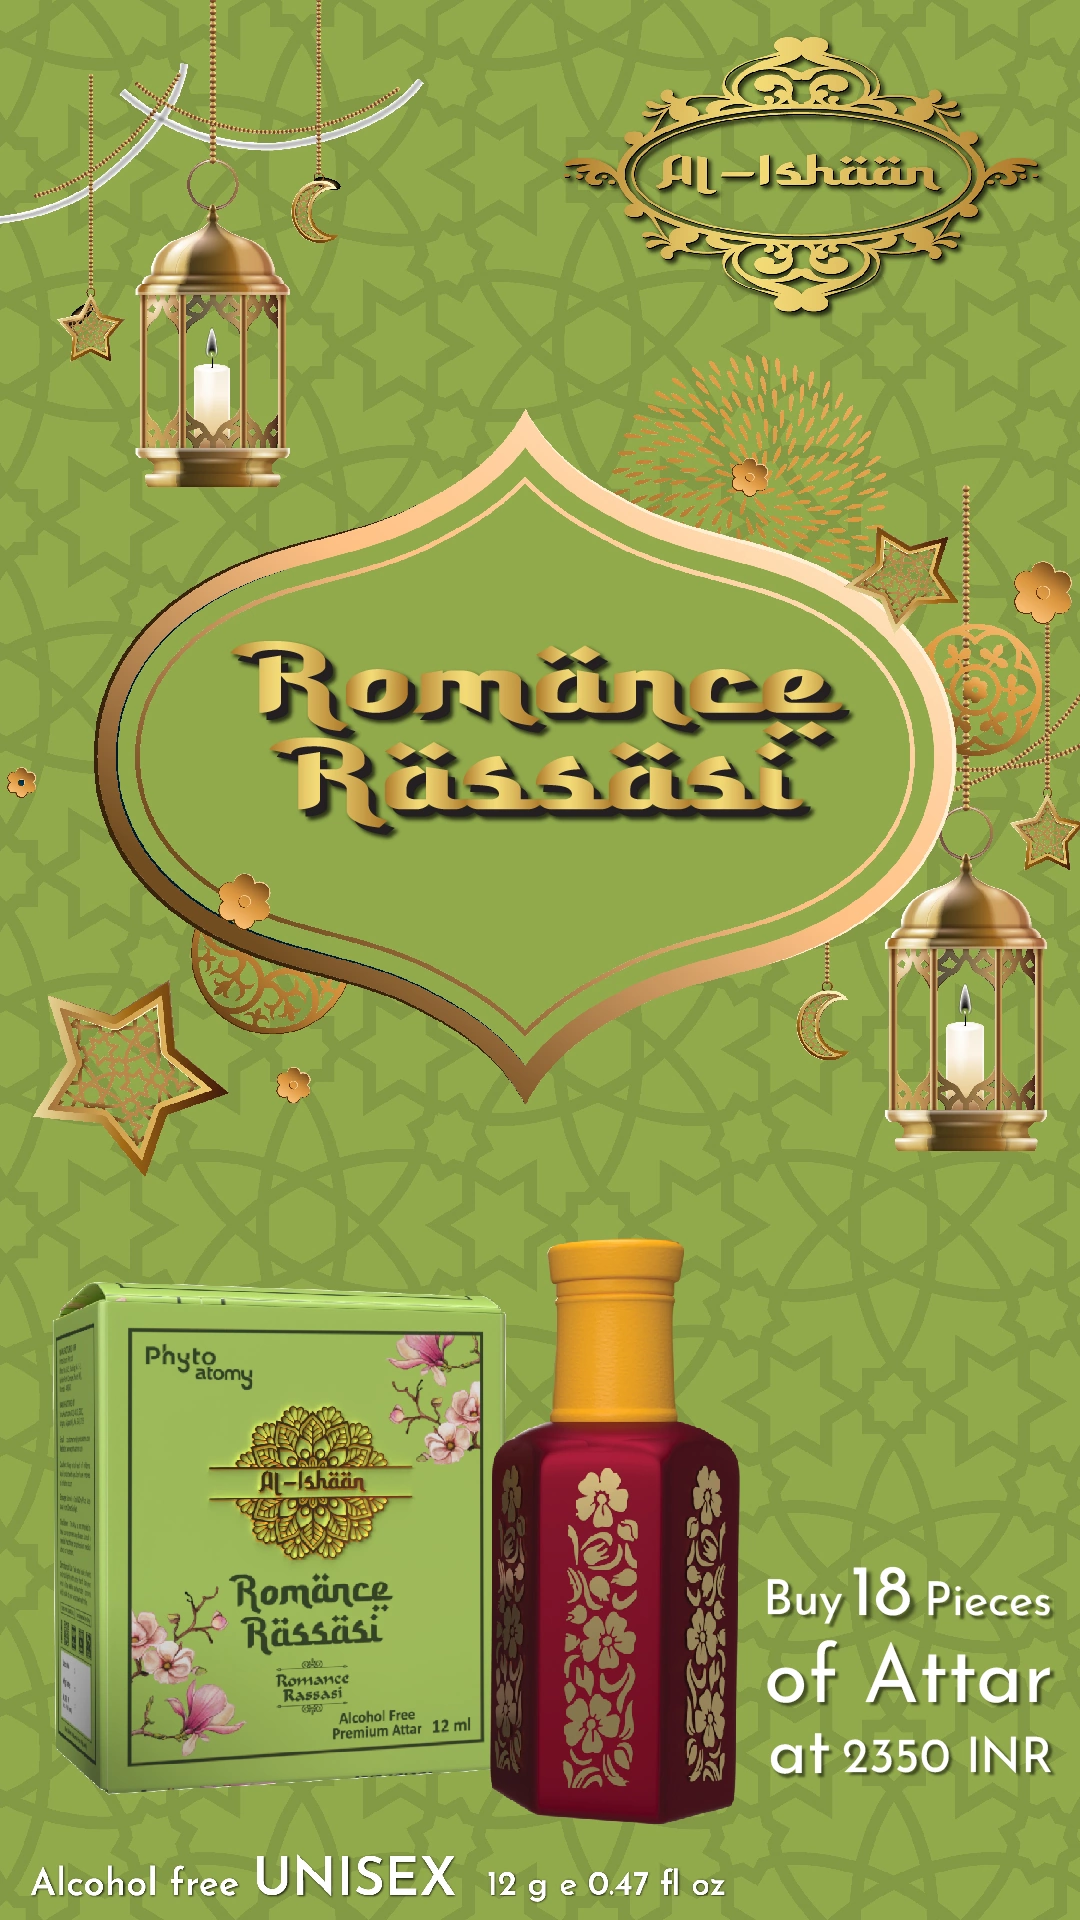 SCBV B2B Al Ishan Romance Rassasi Attar (12ml)-18 Pcs.